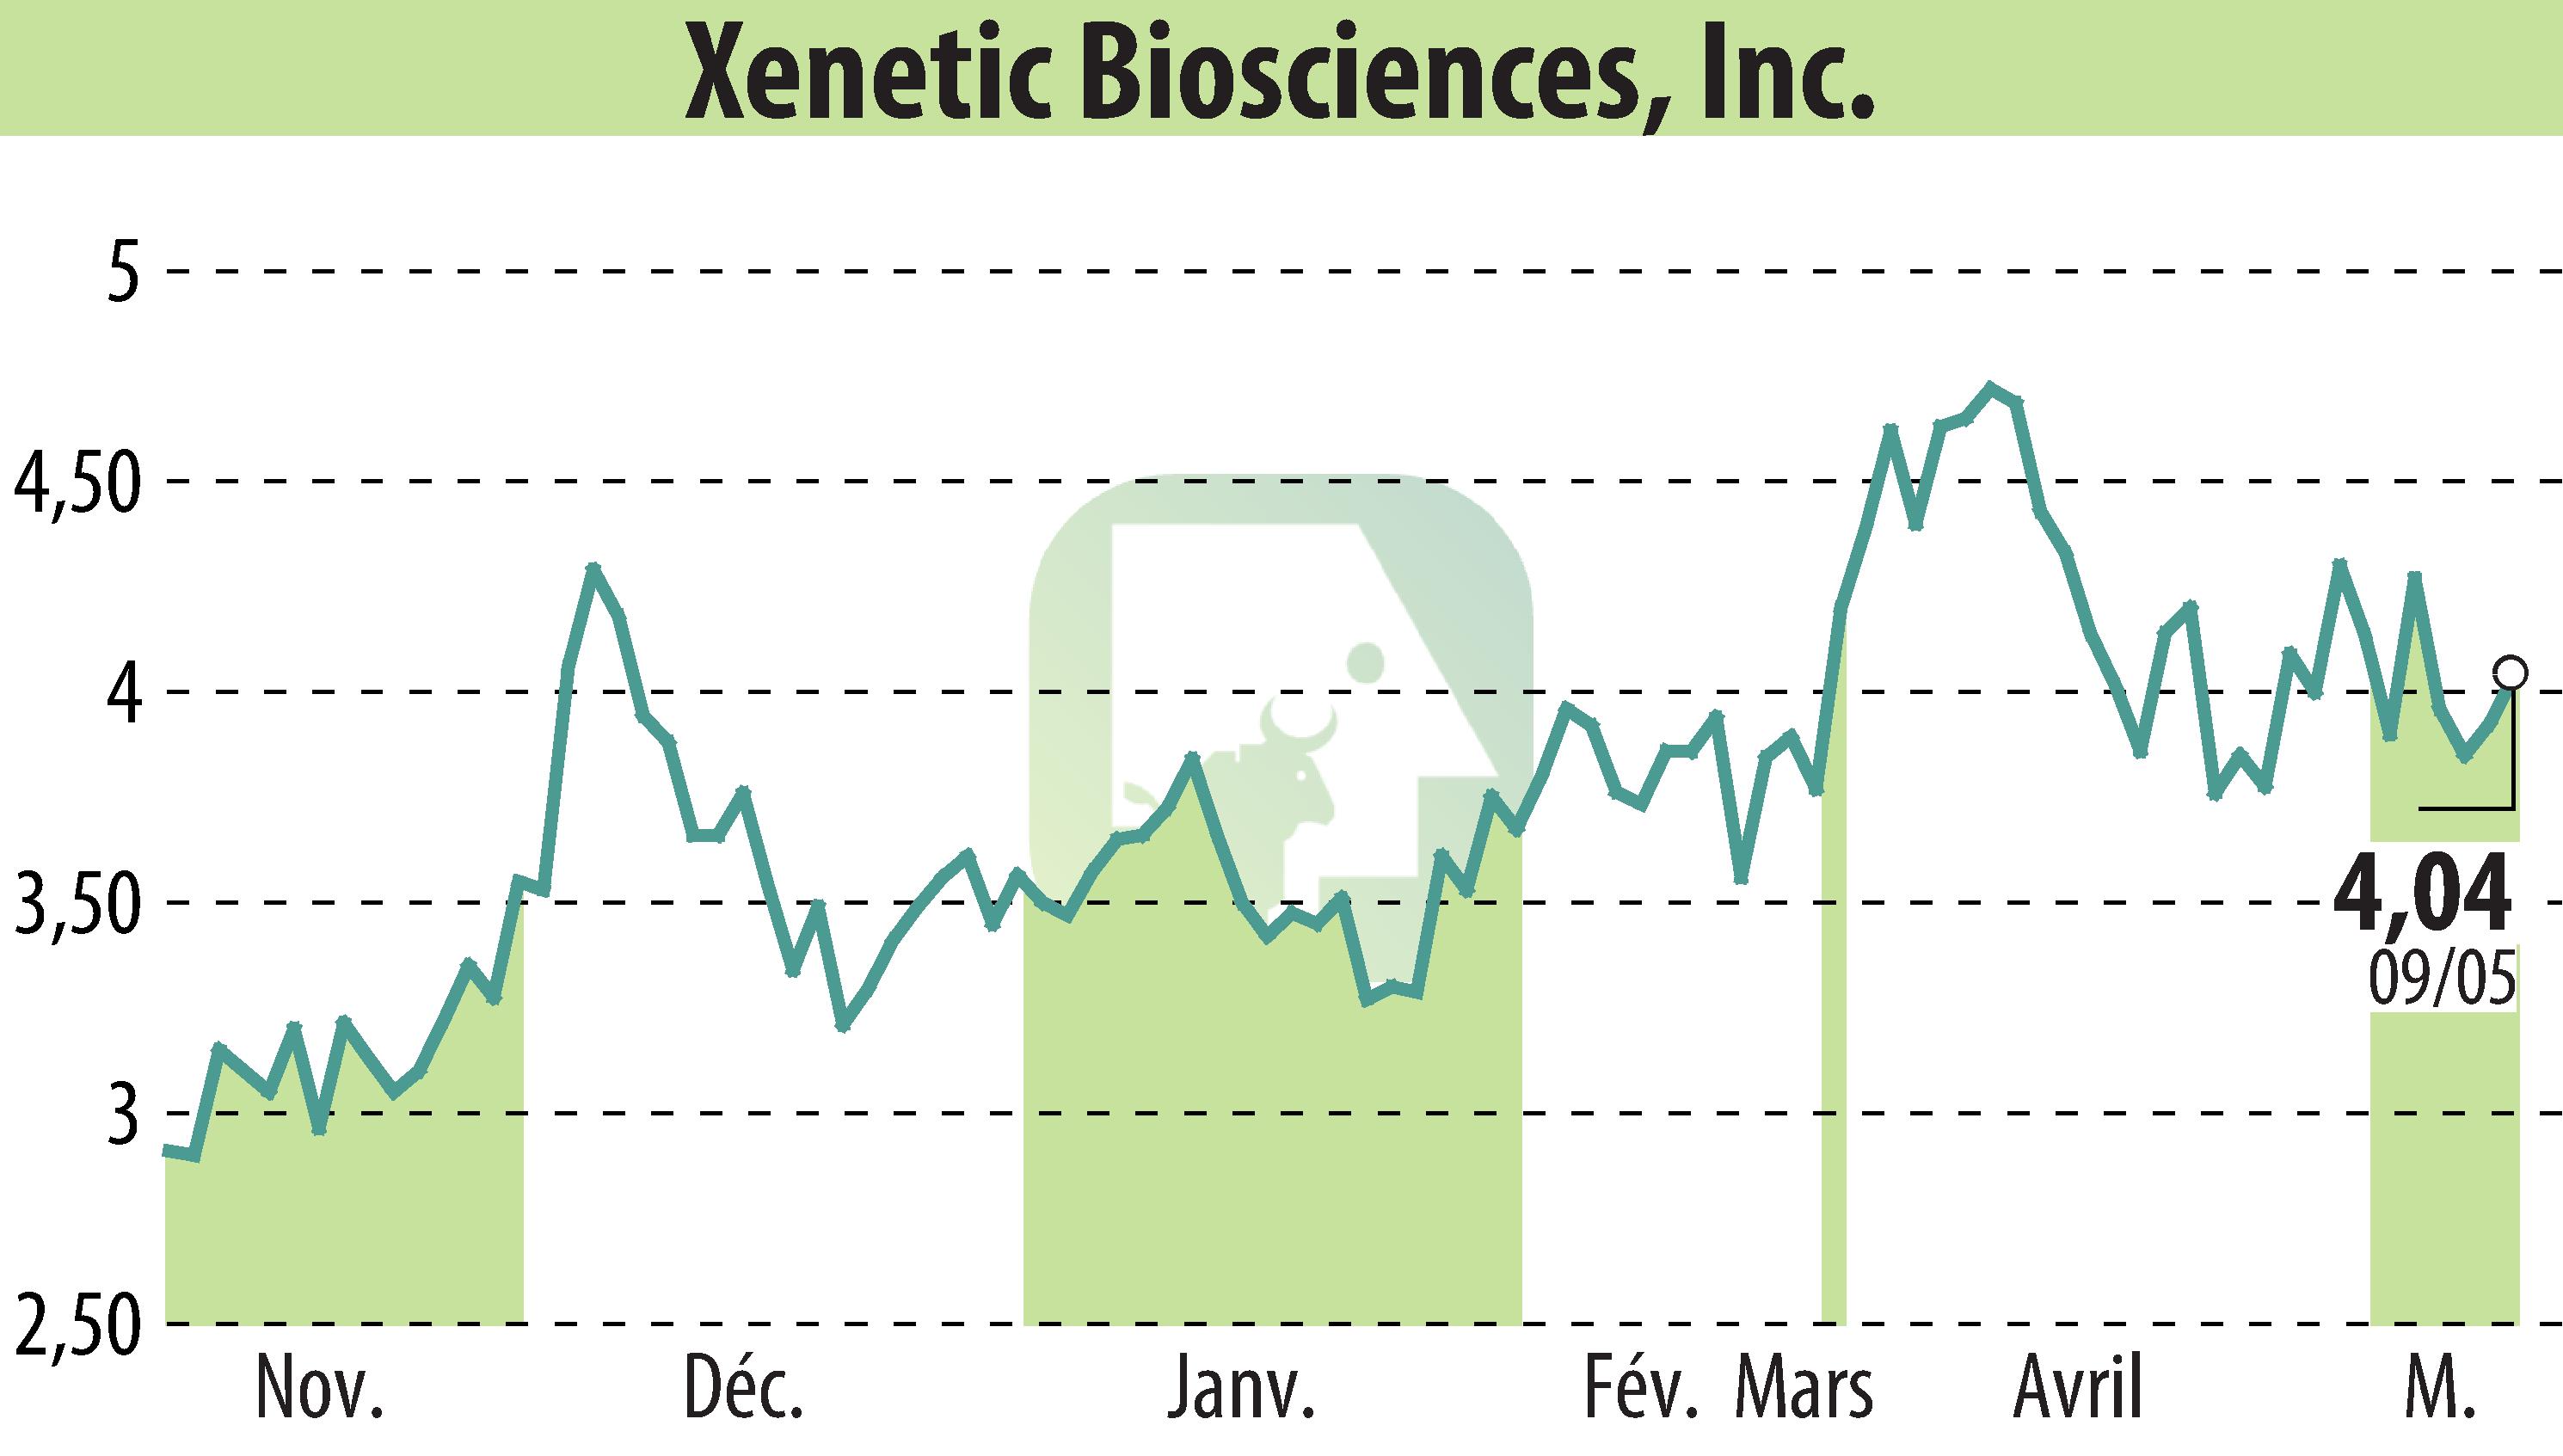 Stock price chart of Xenetic Biosciences, Inc. (EBR:XBIO) showing fluctuations.